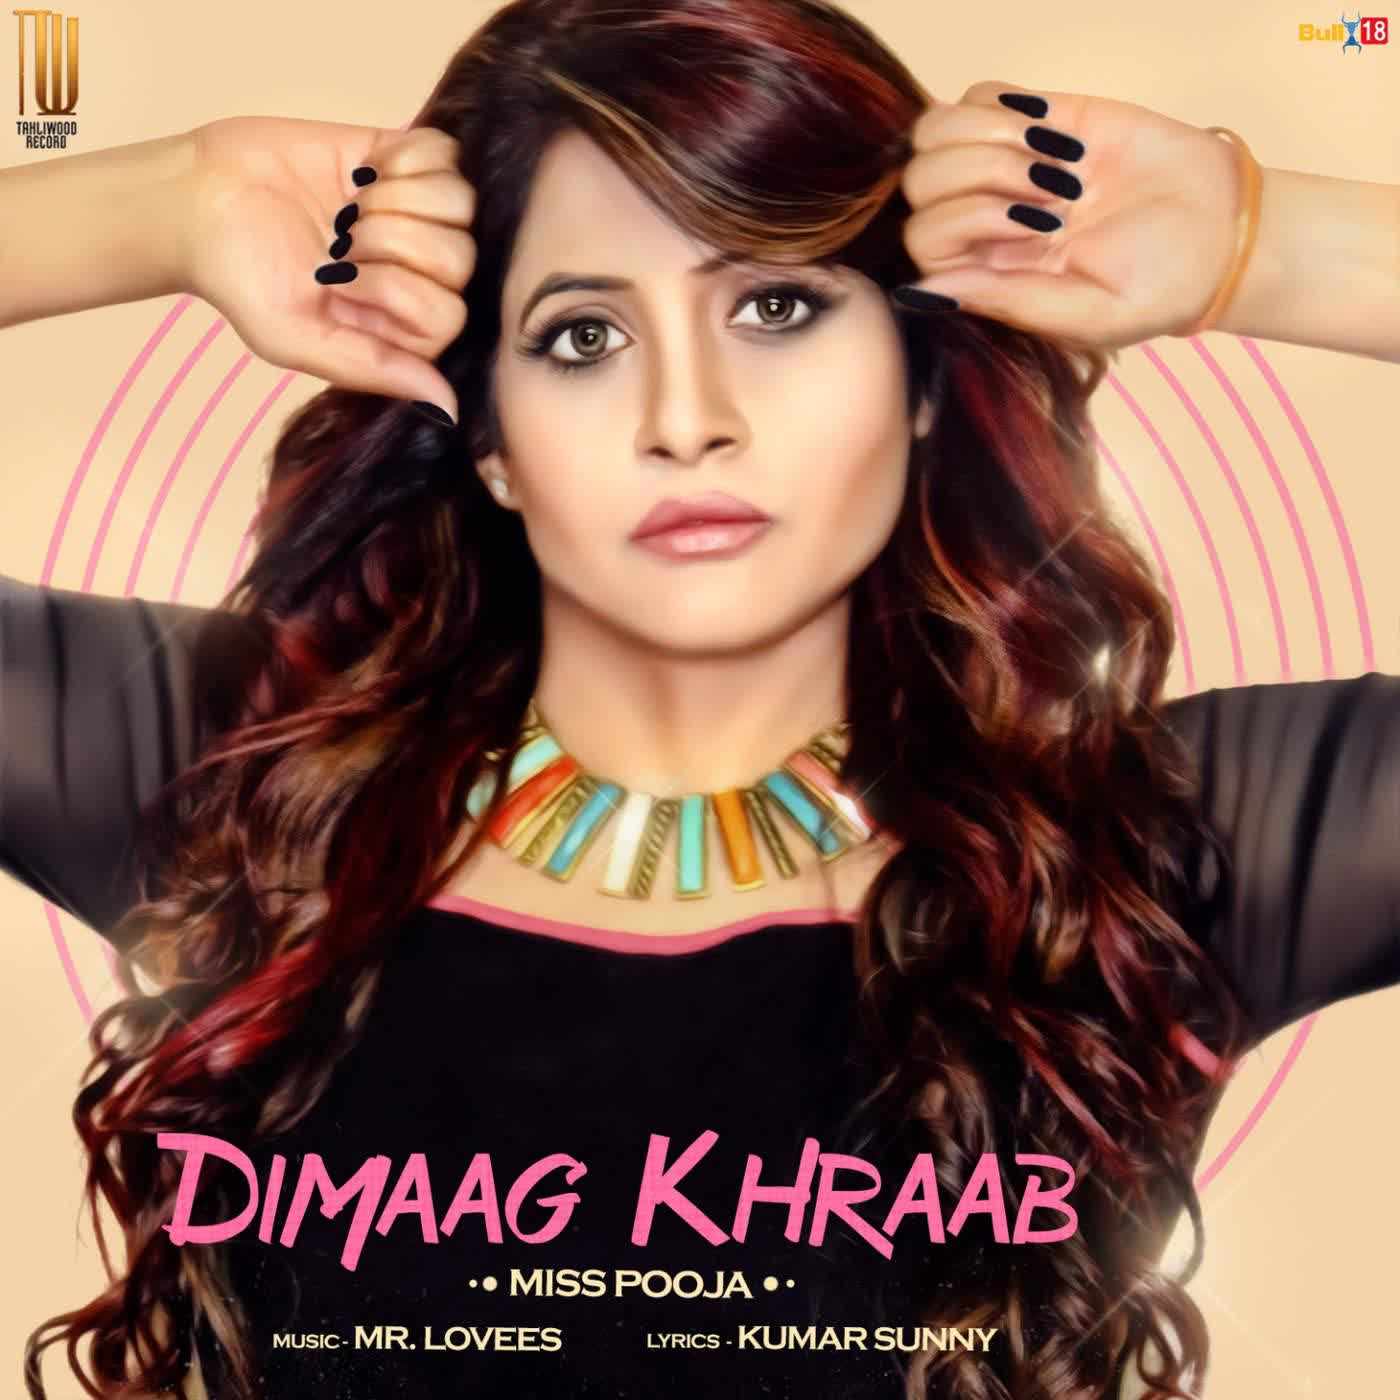 Dimaag Khraab Miss Pooja Mp3 song download